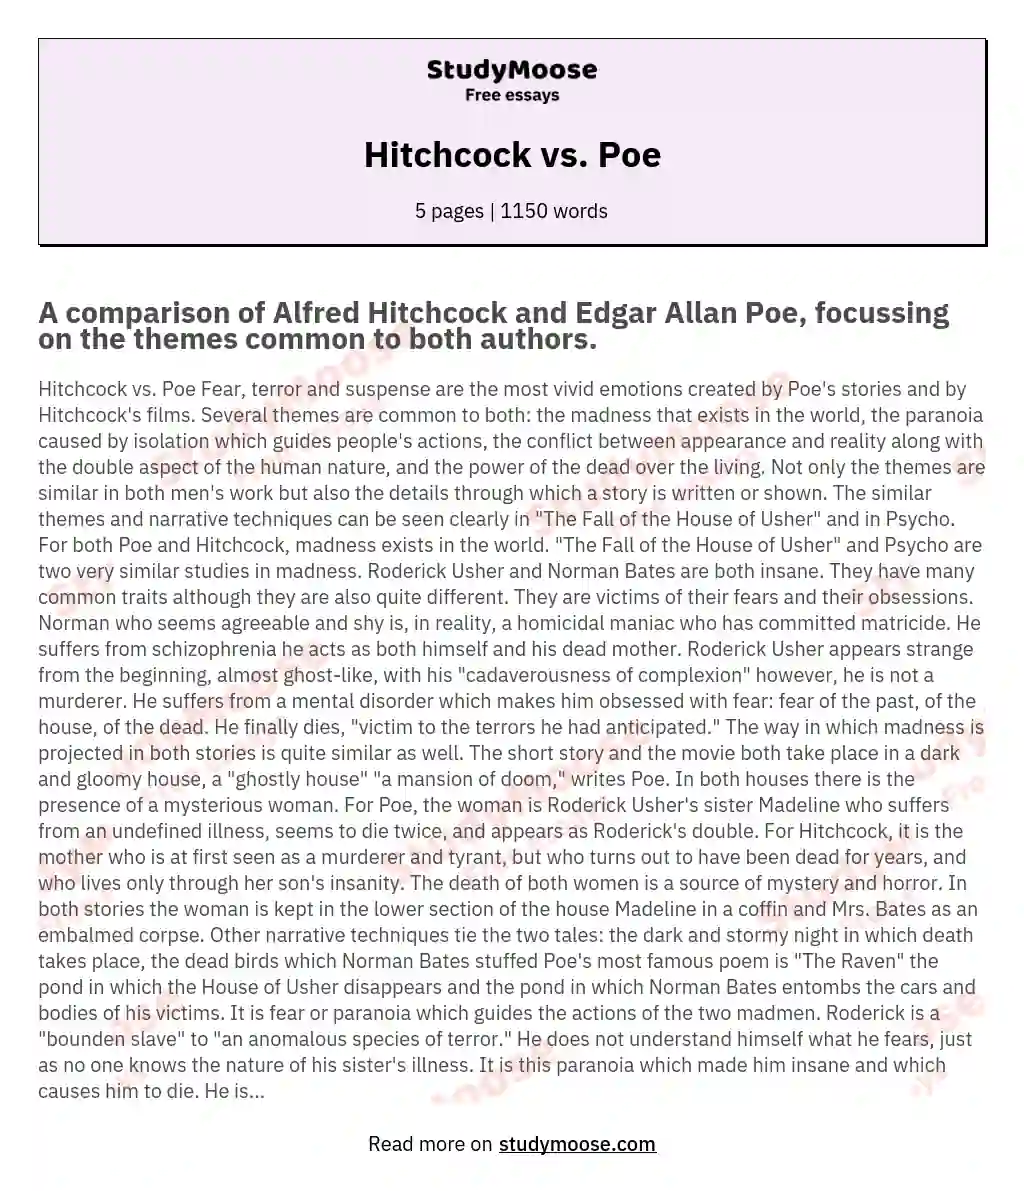 Hitchcock vs. Poe essay